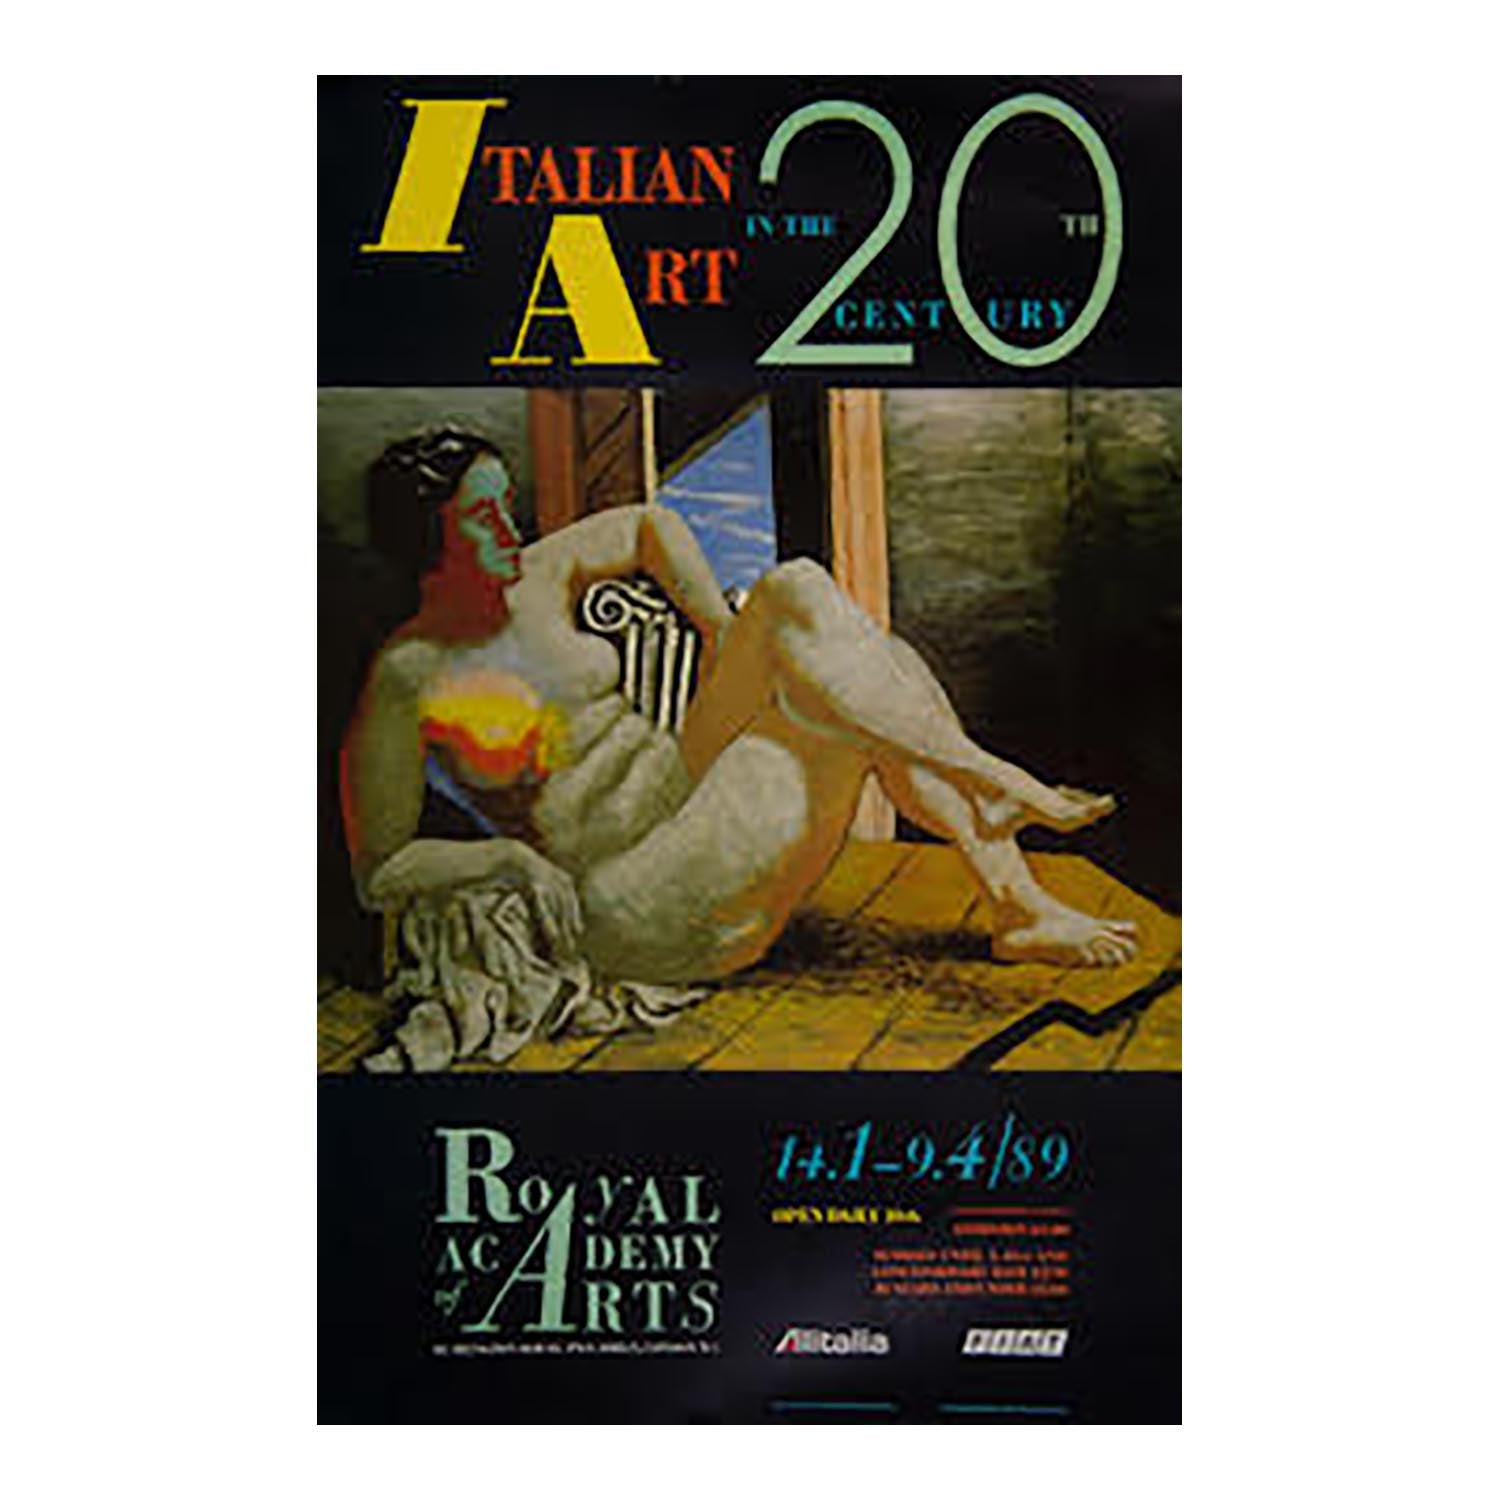 Italian Art in the C20th